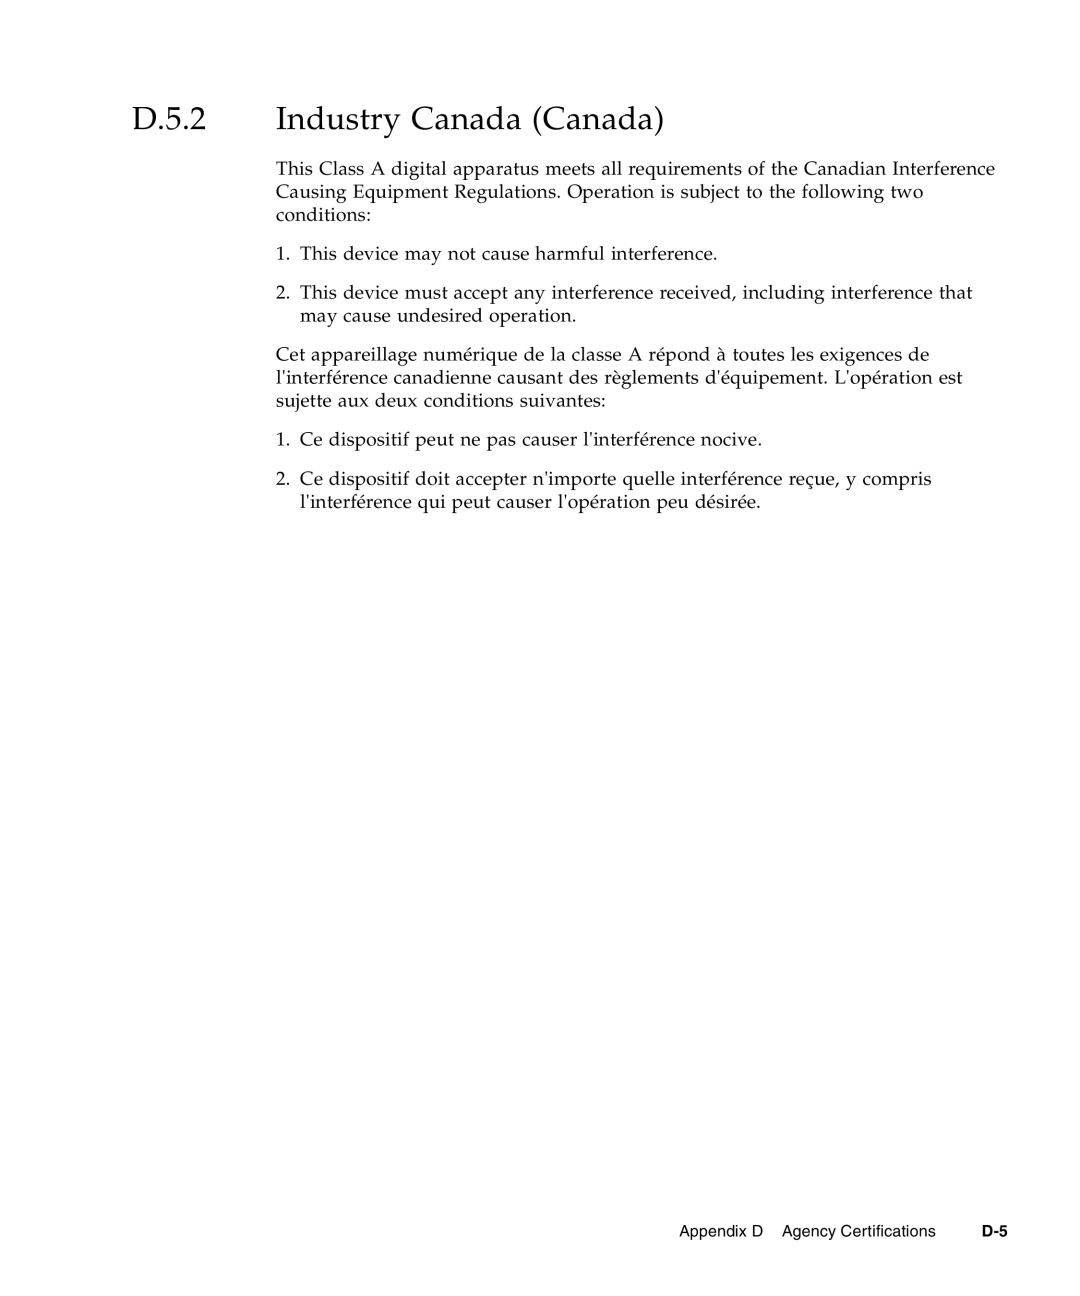 Sun Microsystems CP3240 manual D.5.2 Industry Canada Canada 